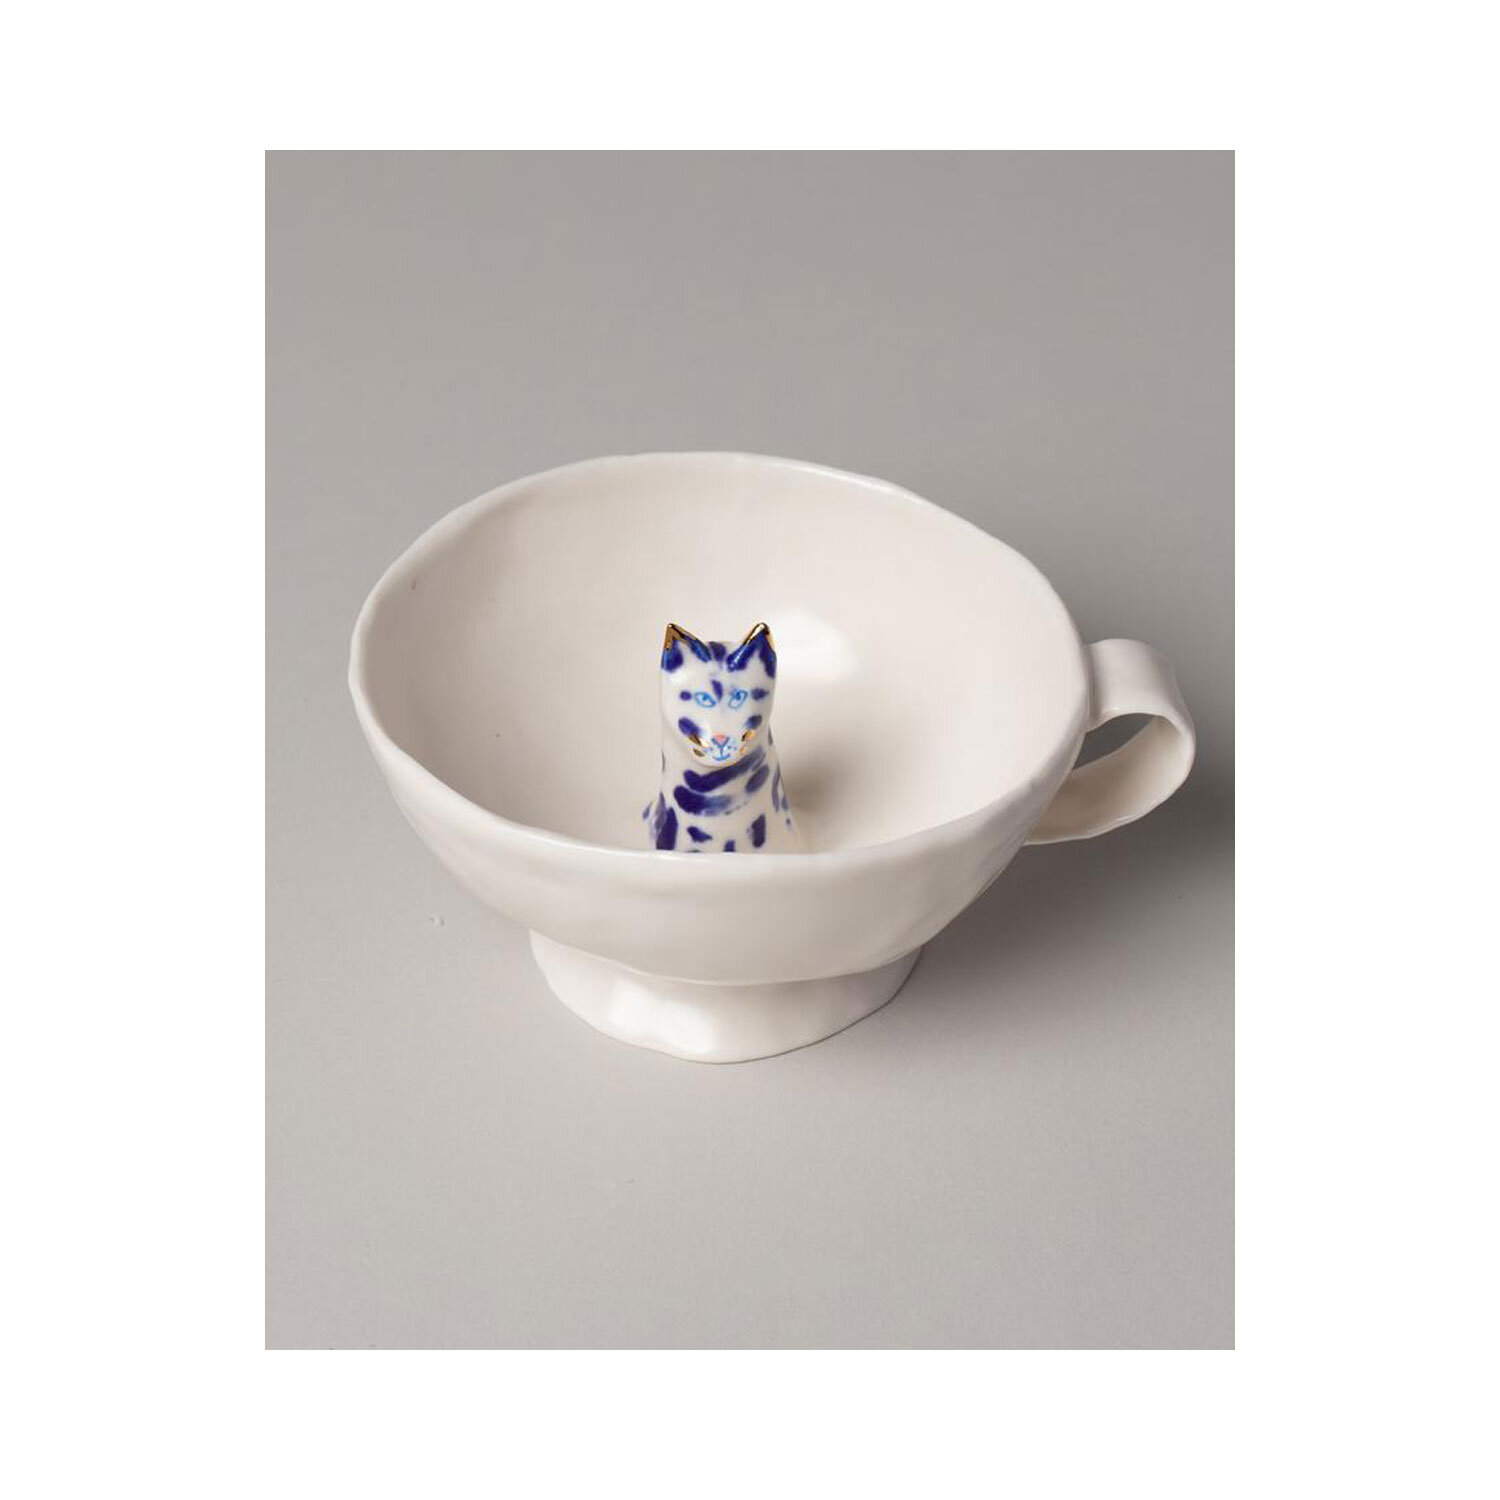 Cat Cup by Eleanor Boström